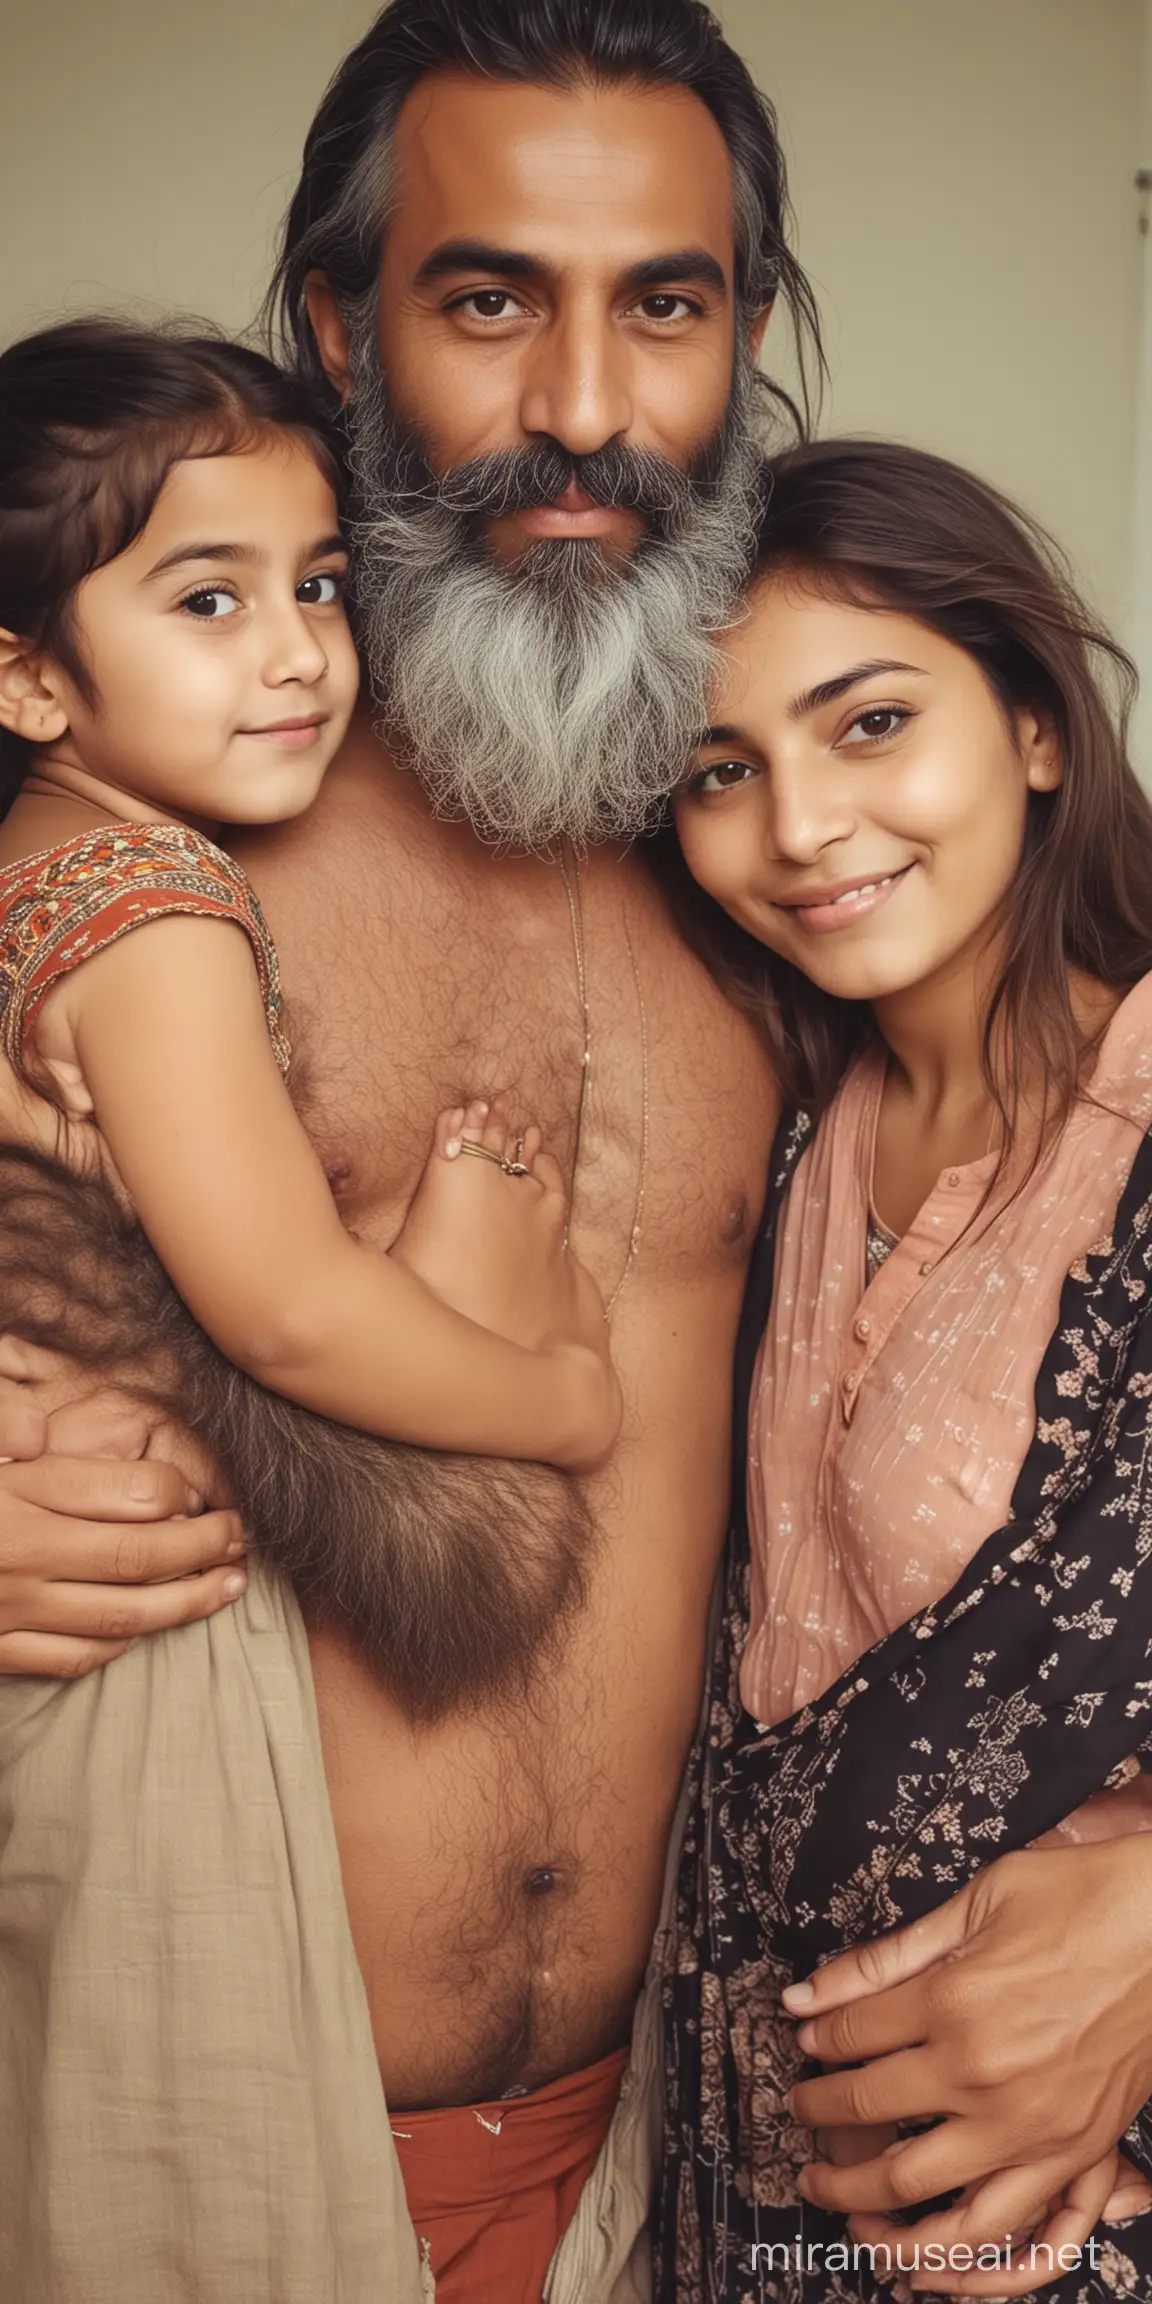 Polyamorous Pakistani Grandfather Embracing Young Couple